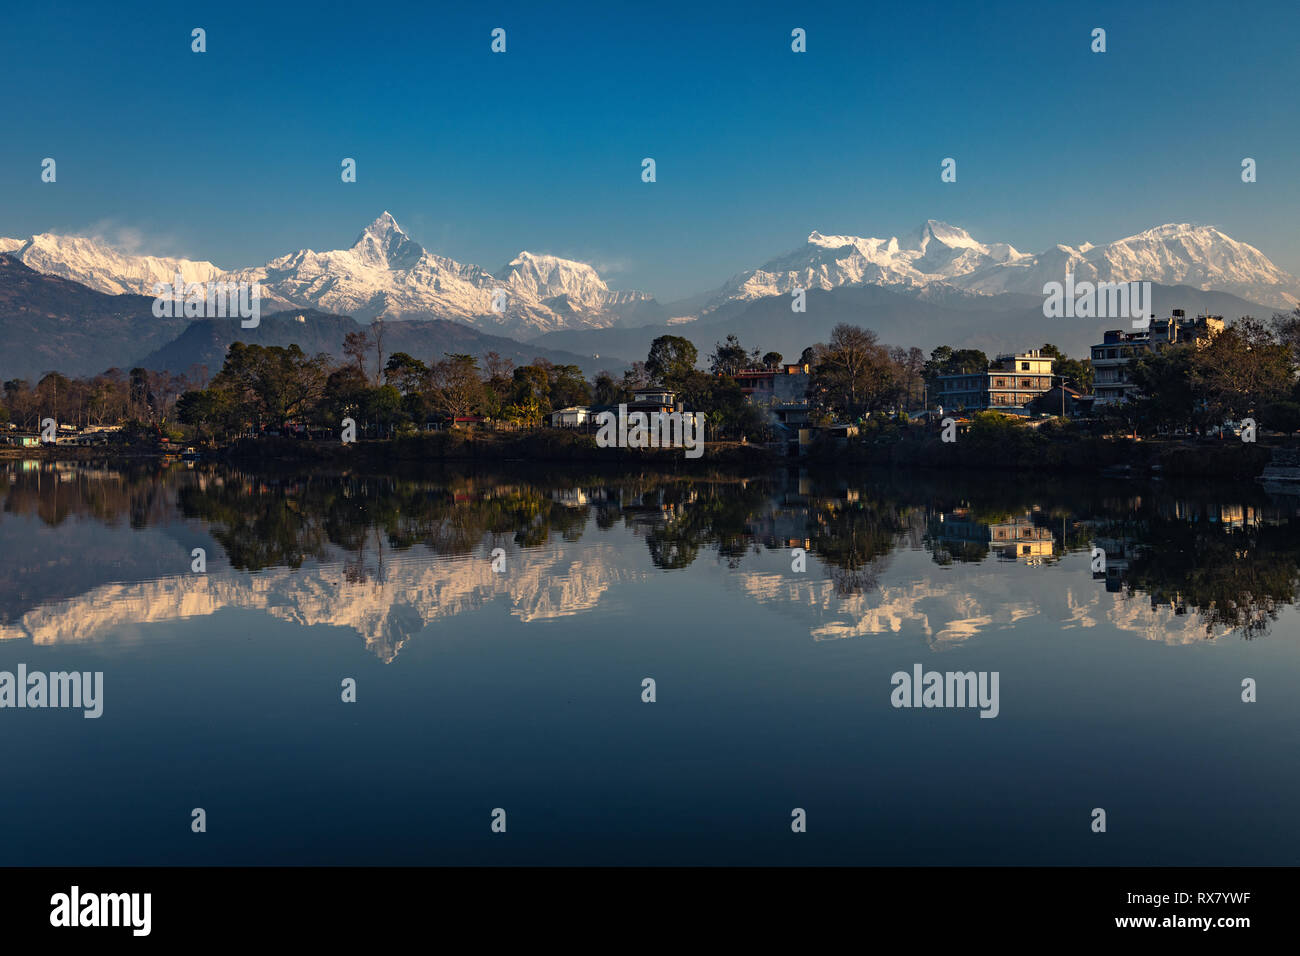 The cityscape of Pokhara along with Phewa lake as a bird's eye view Stock Photo